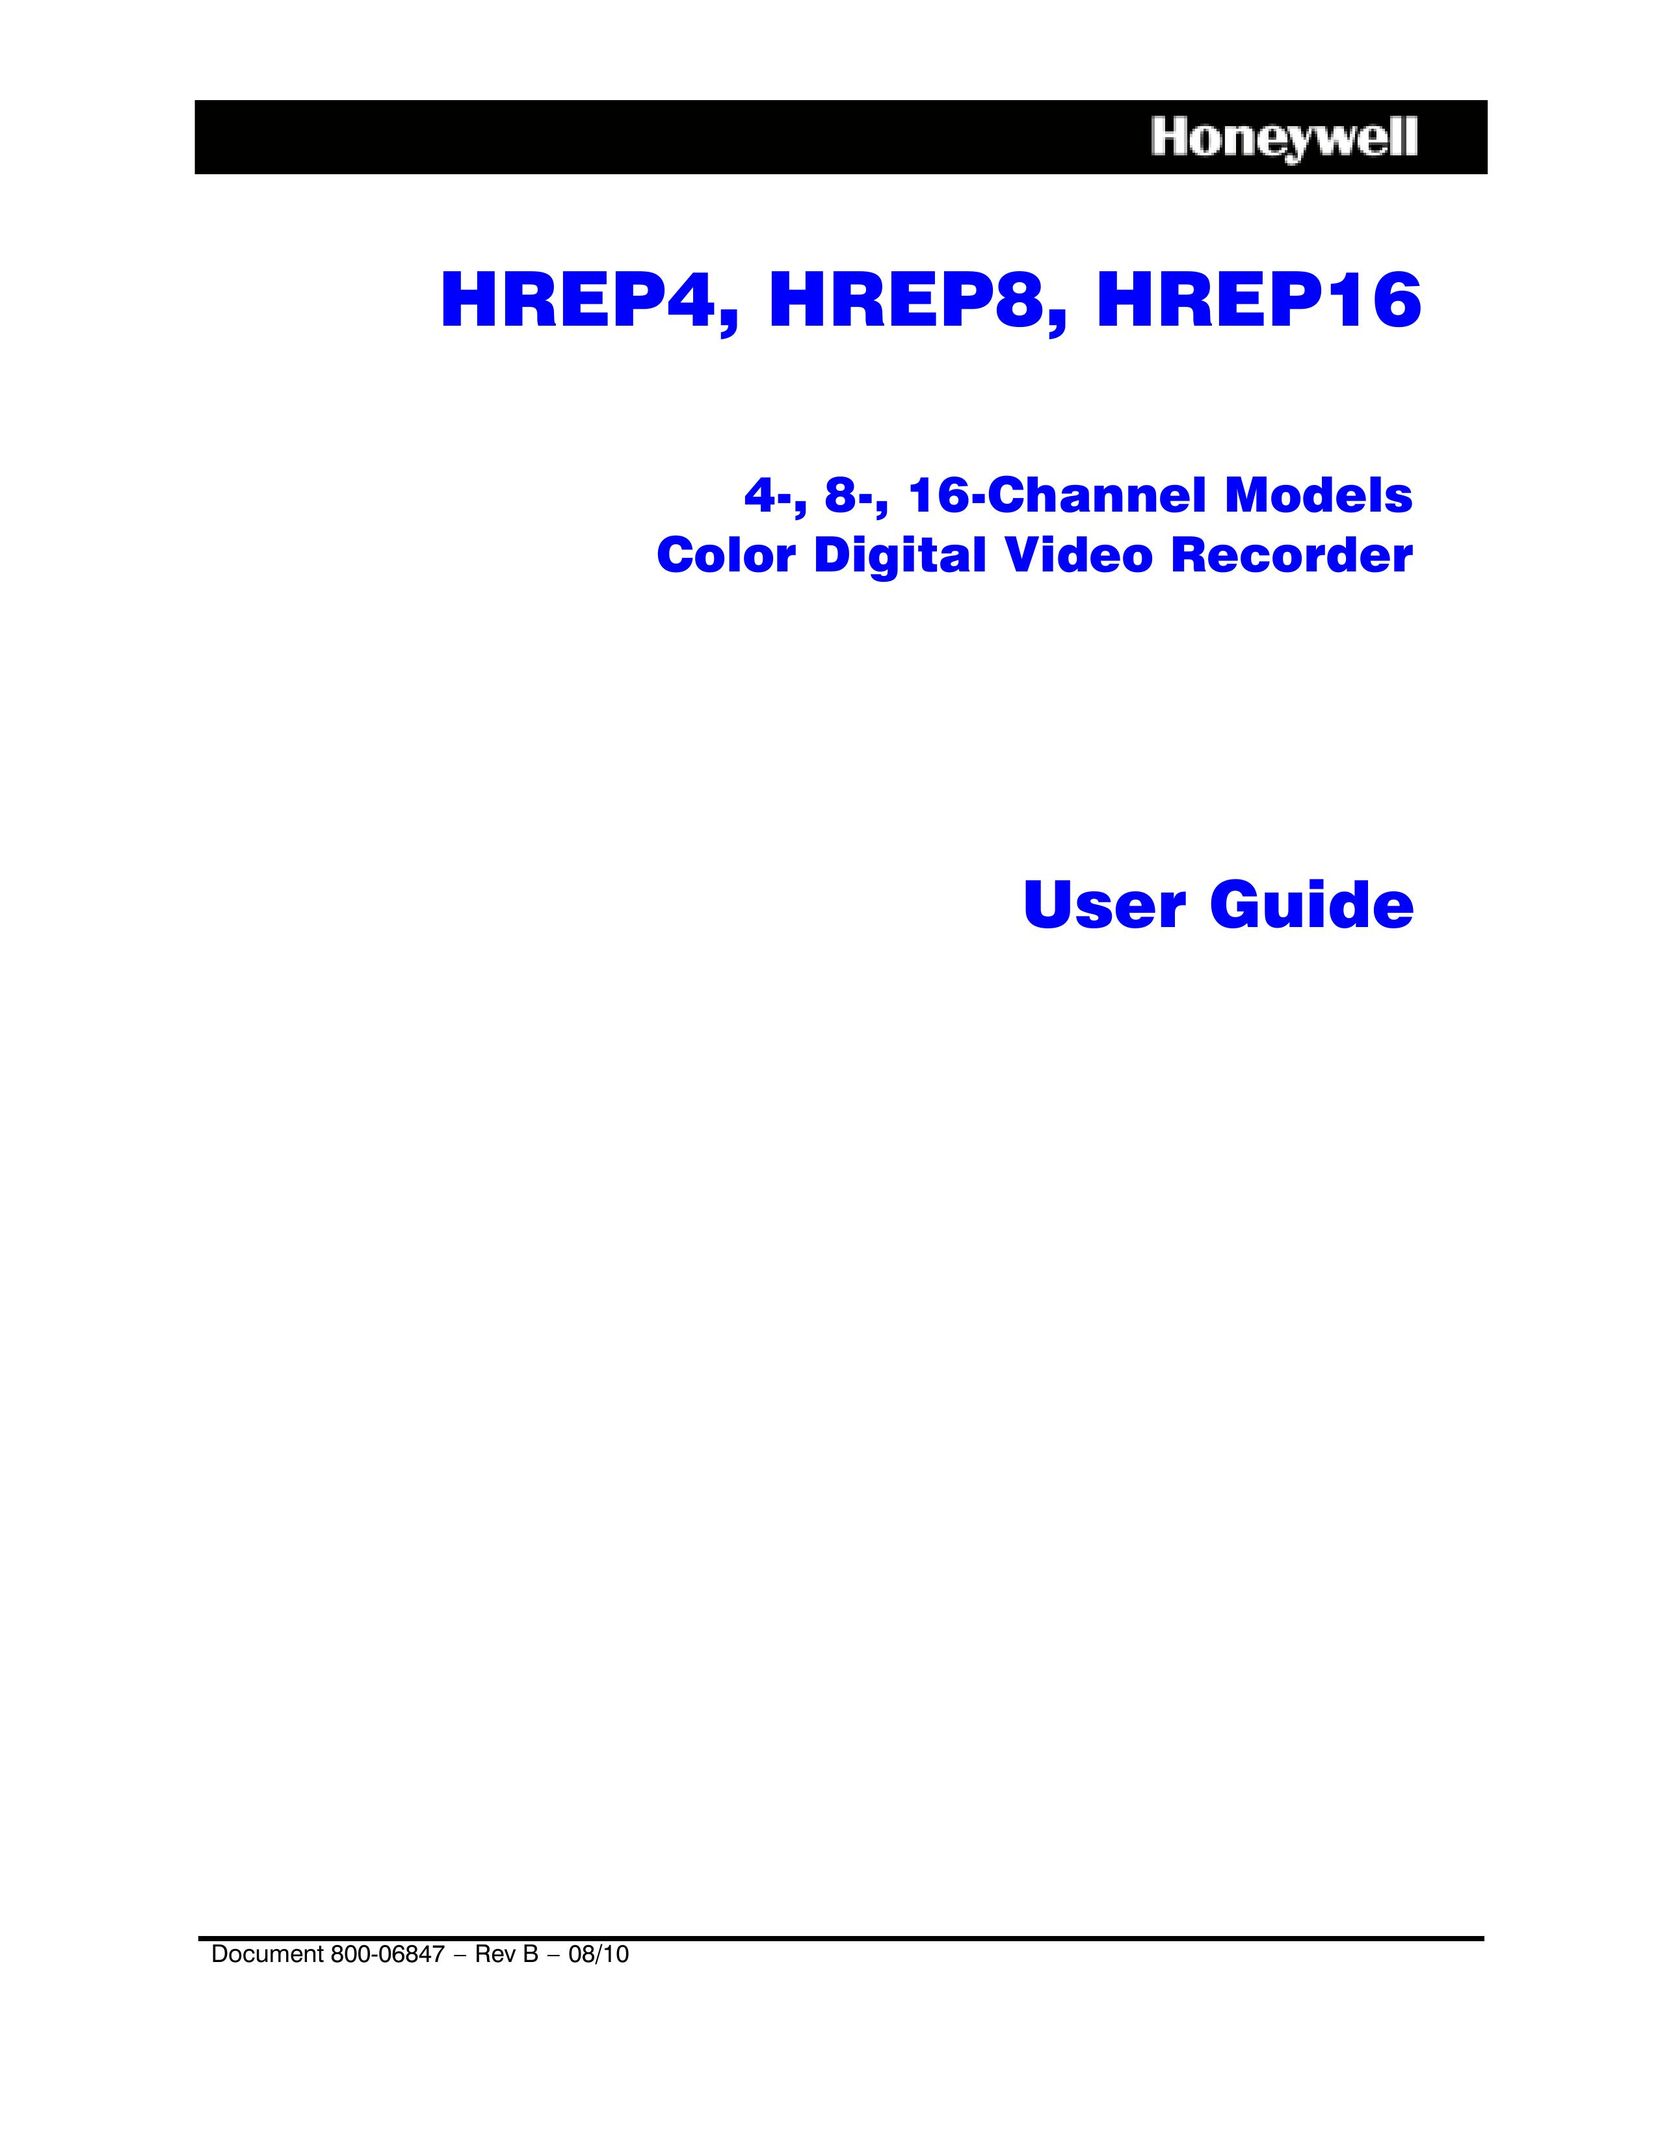 Honeywell HREP4 DVR User Manual